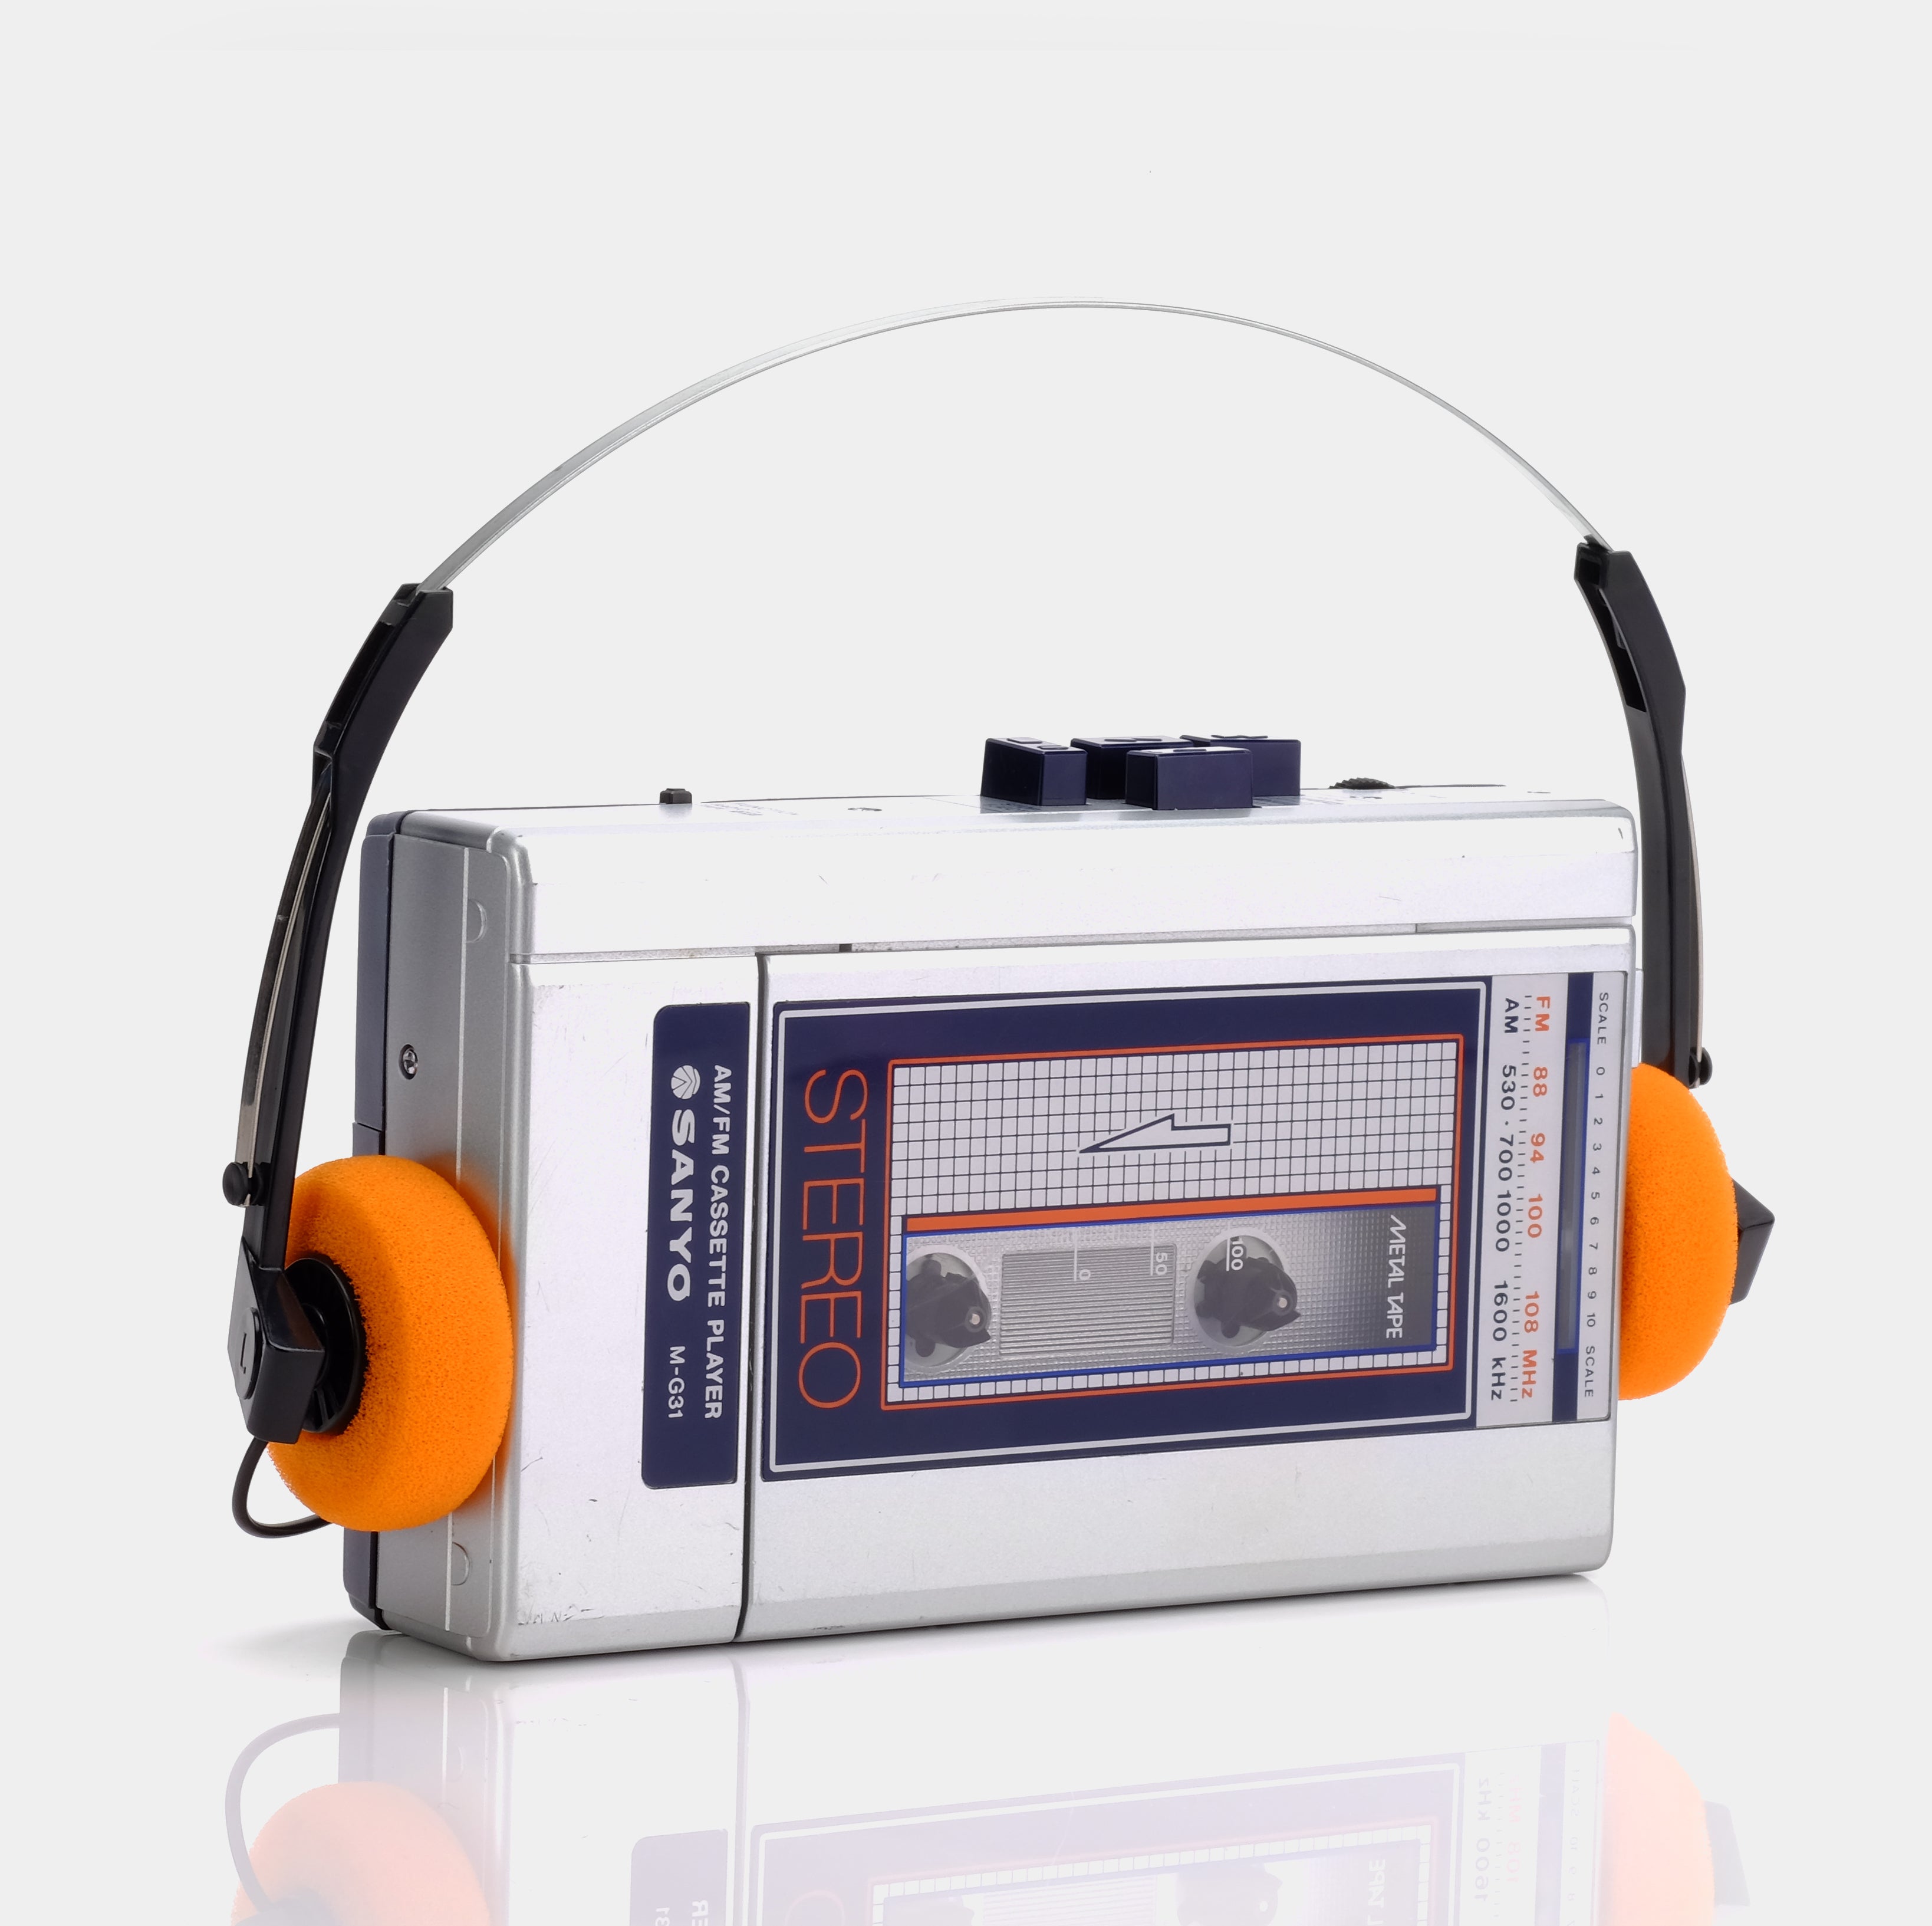 Sanyo Stereo M-G31 AM/FM Portable Cassette Player